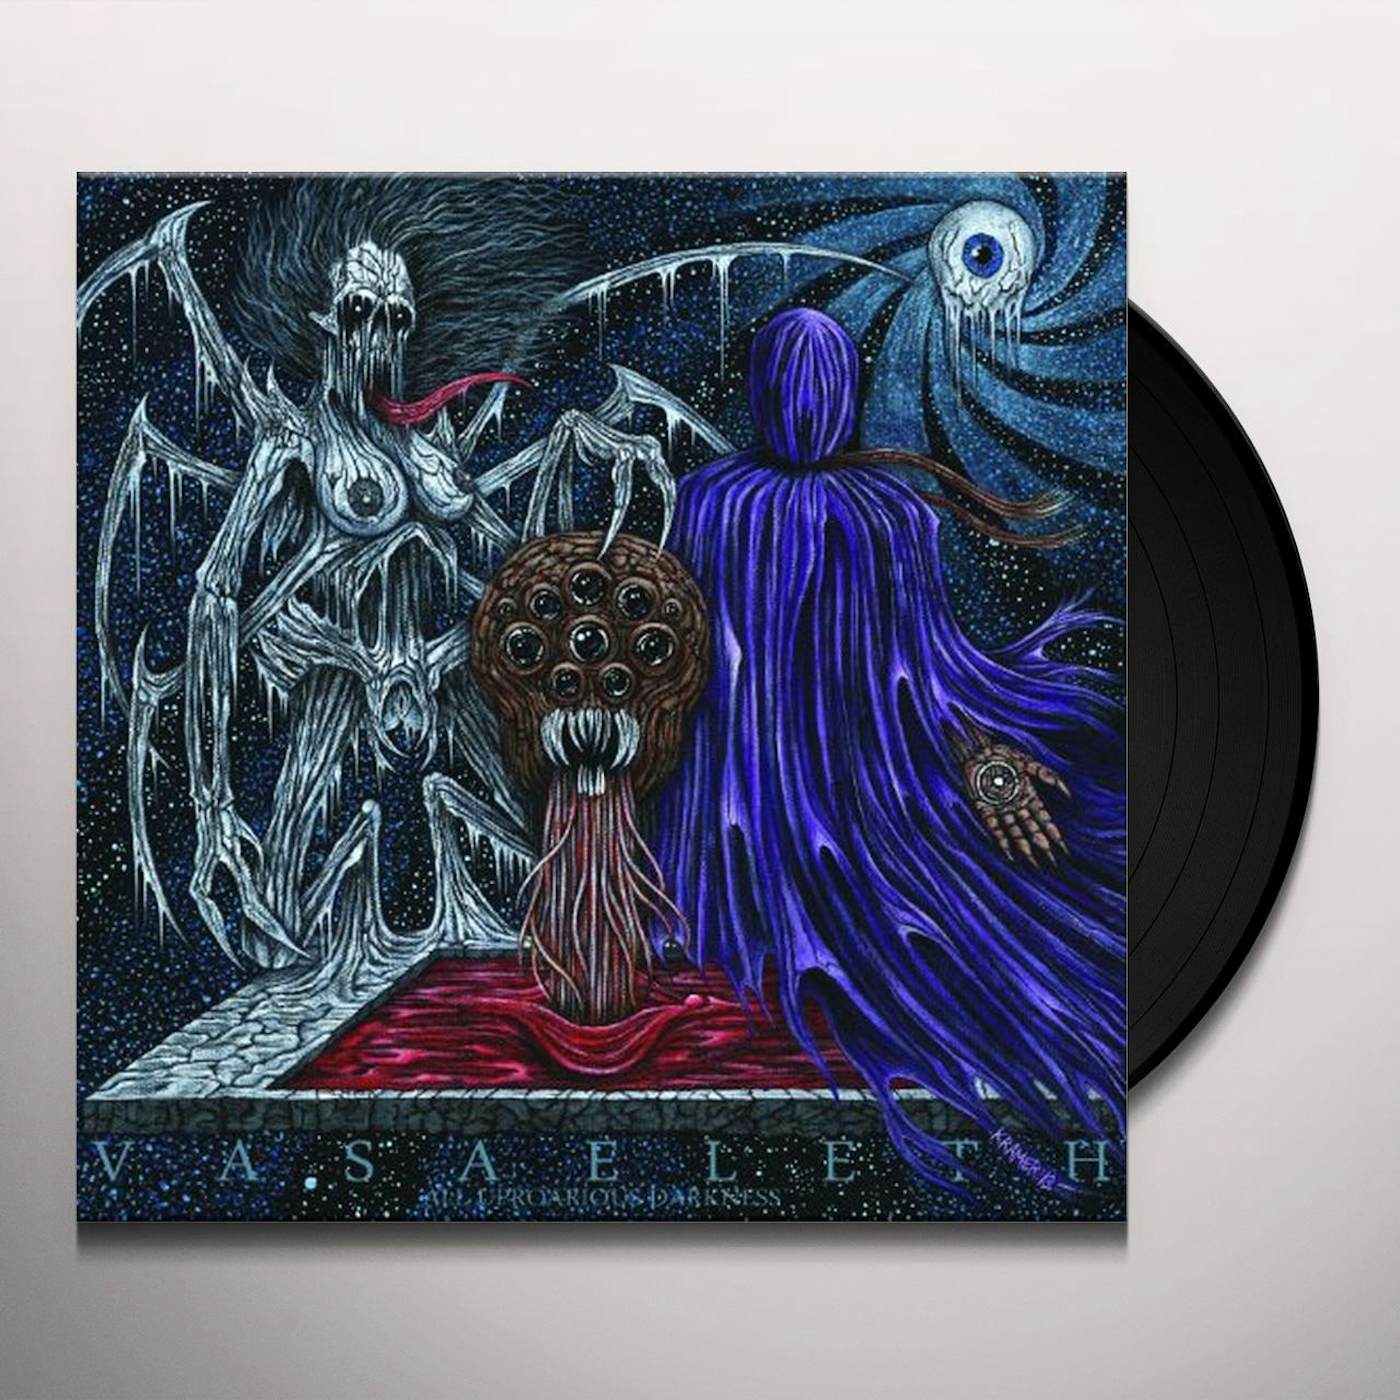 Vasaeleth All Uproarious Darkness Vinyl Record